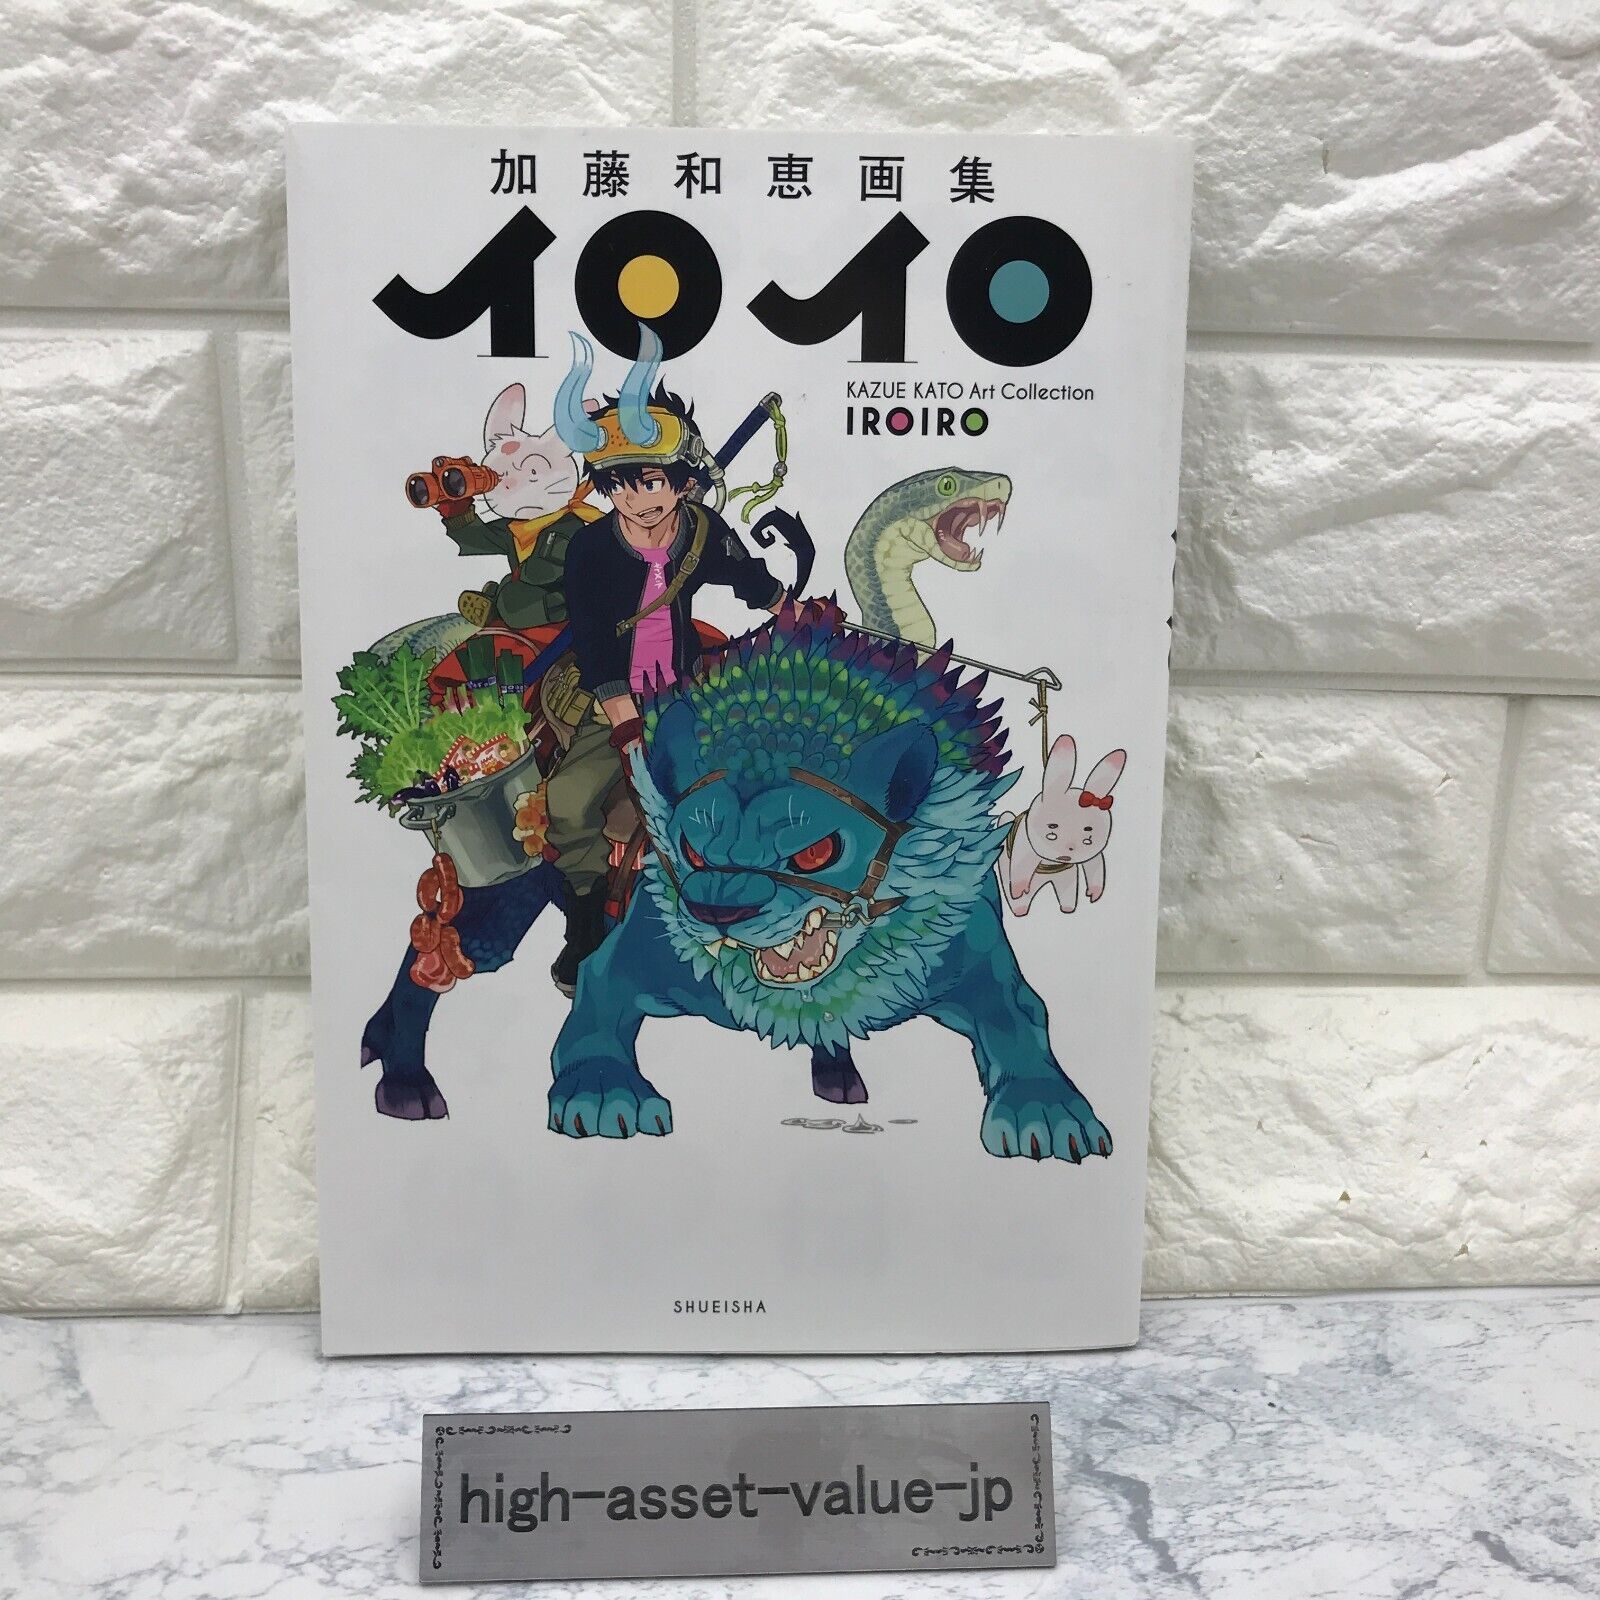 Kazue Kato Artworks Iroiro Art Book Blue Exorcist Anime Manga Art Collection JP.